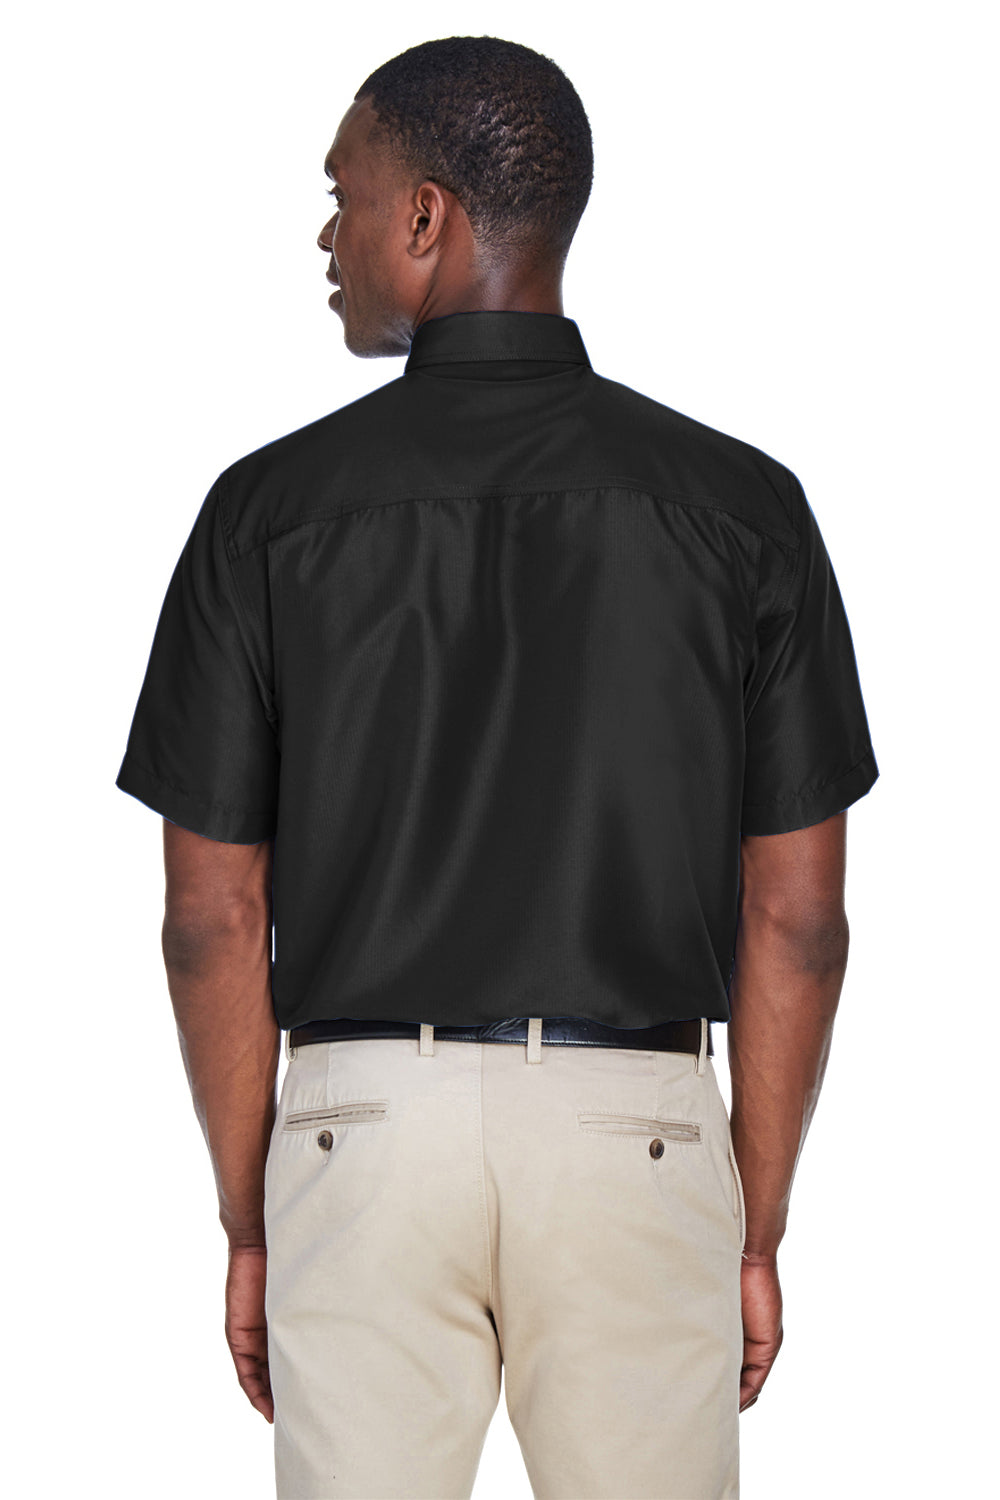 Harriton M580 Mens Key West Performance Short Sleeve Button Down Shirt w/ Double Pockets Black Back